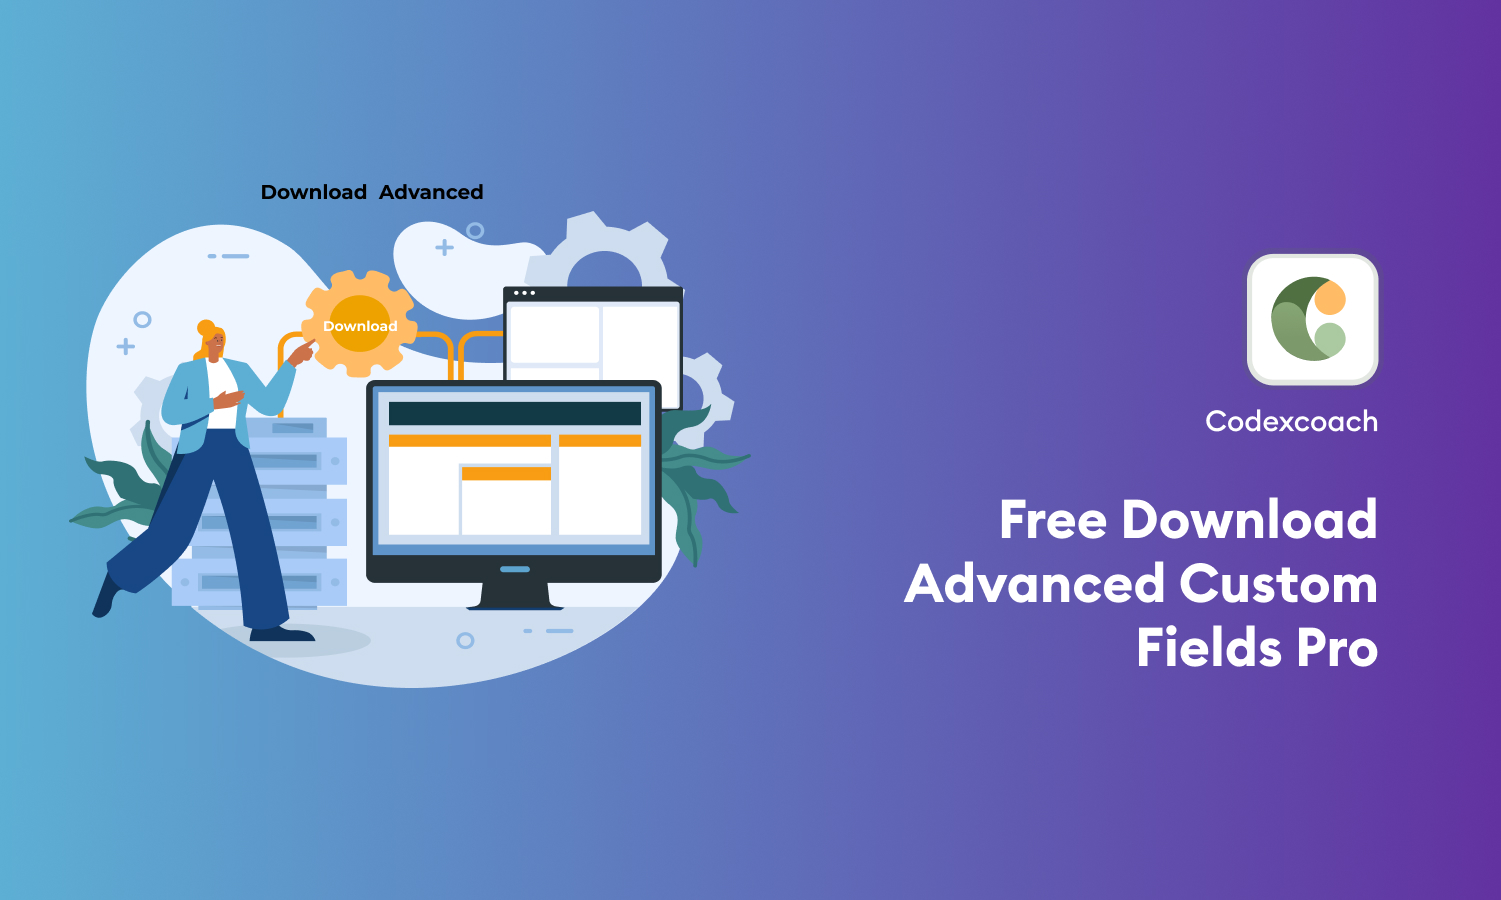 Free Download Advanced Custom Fields Pro